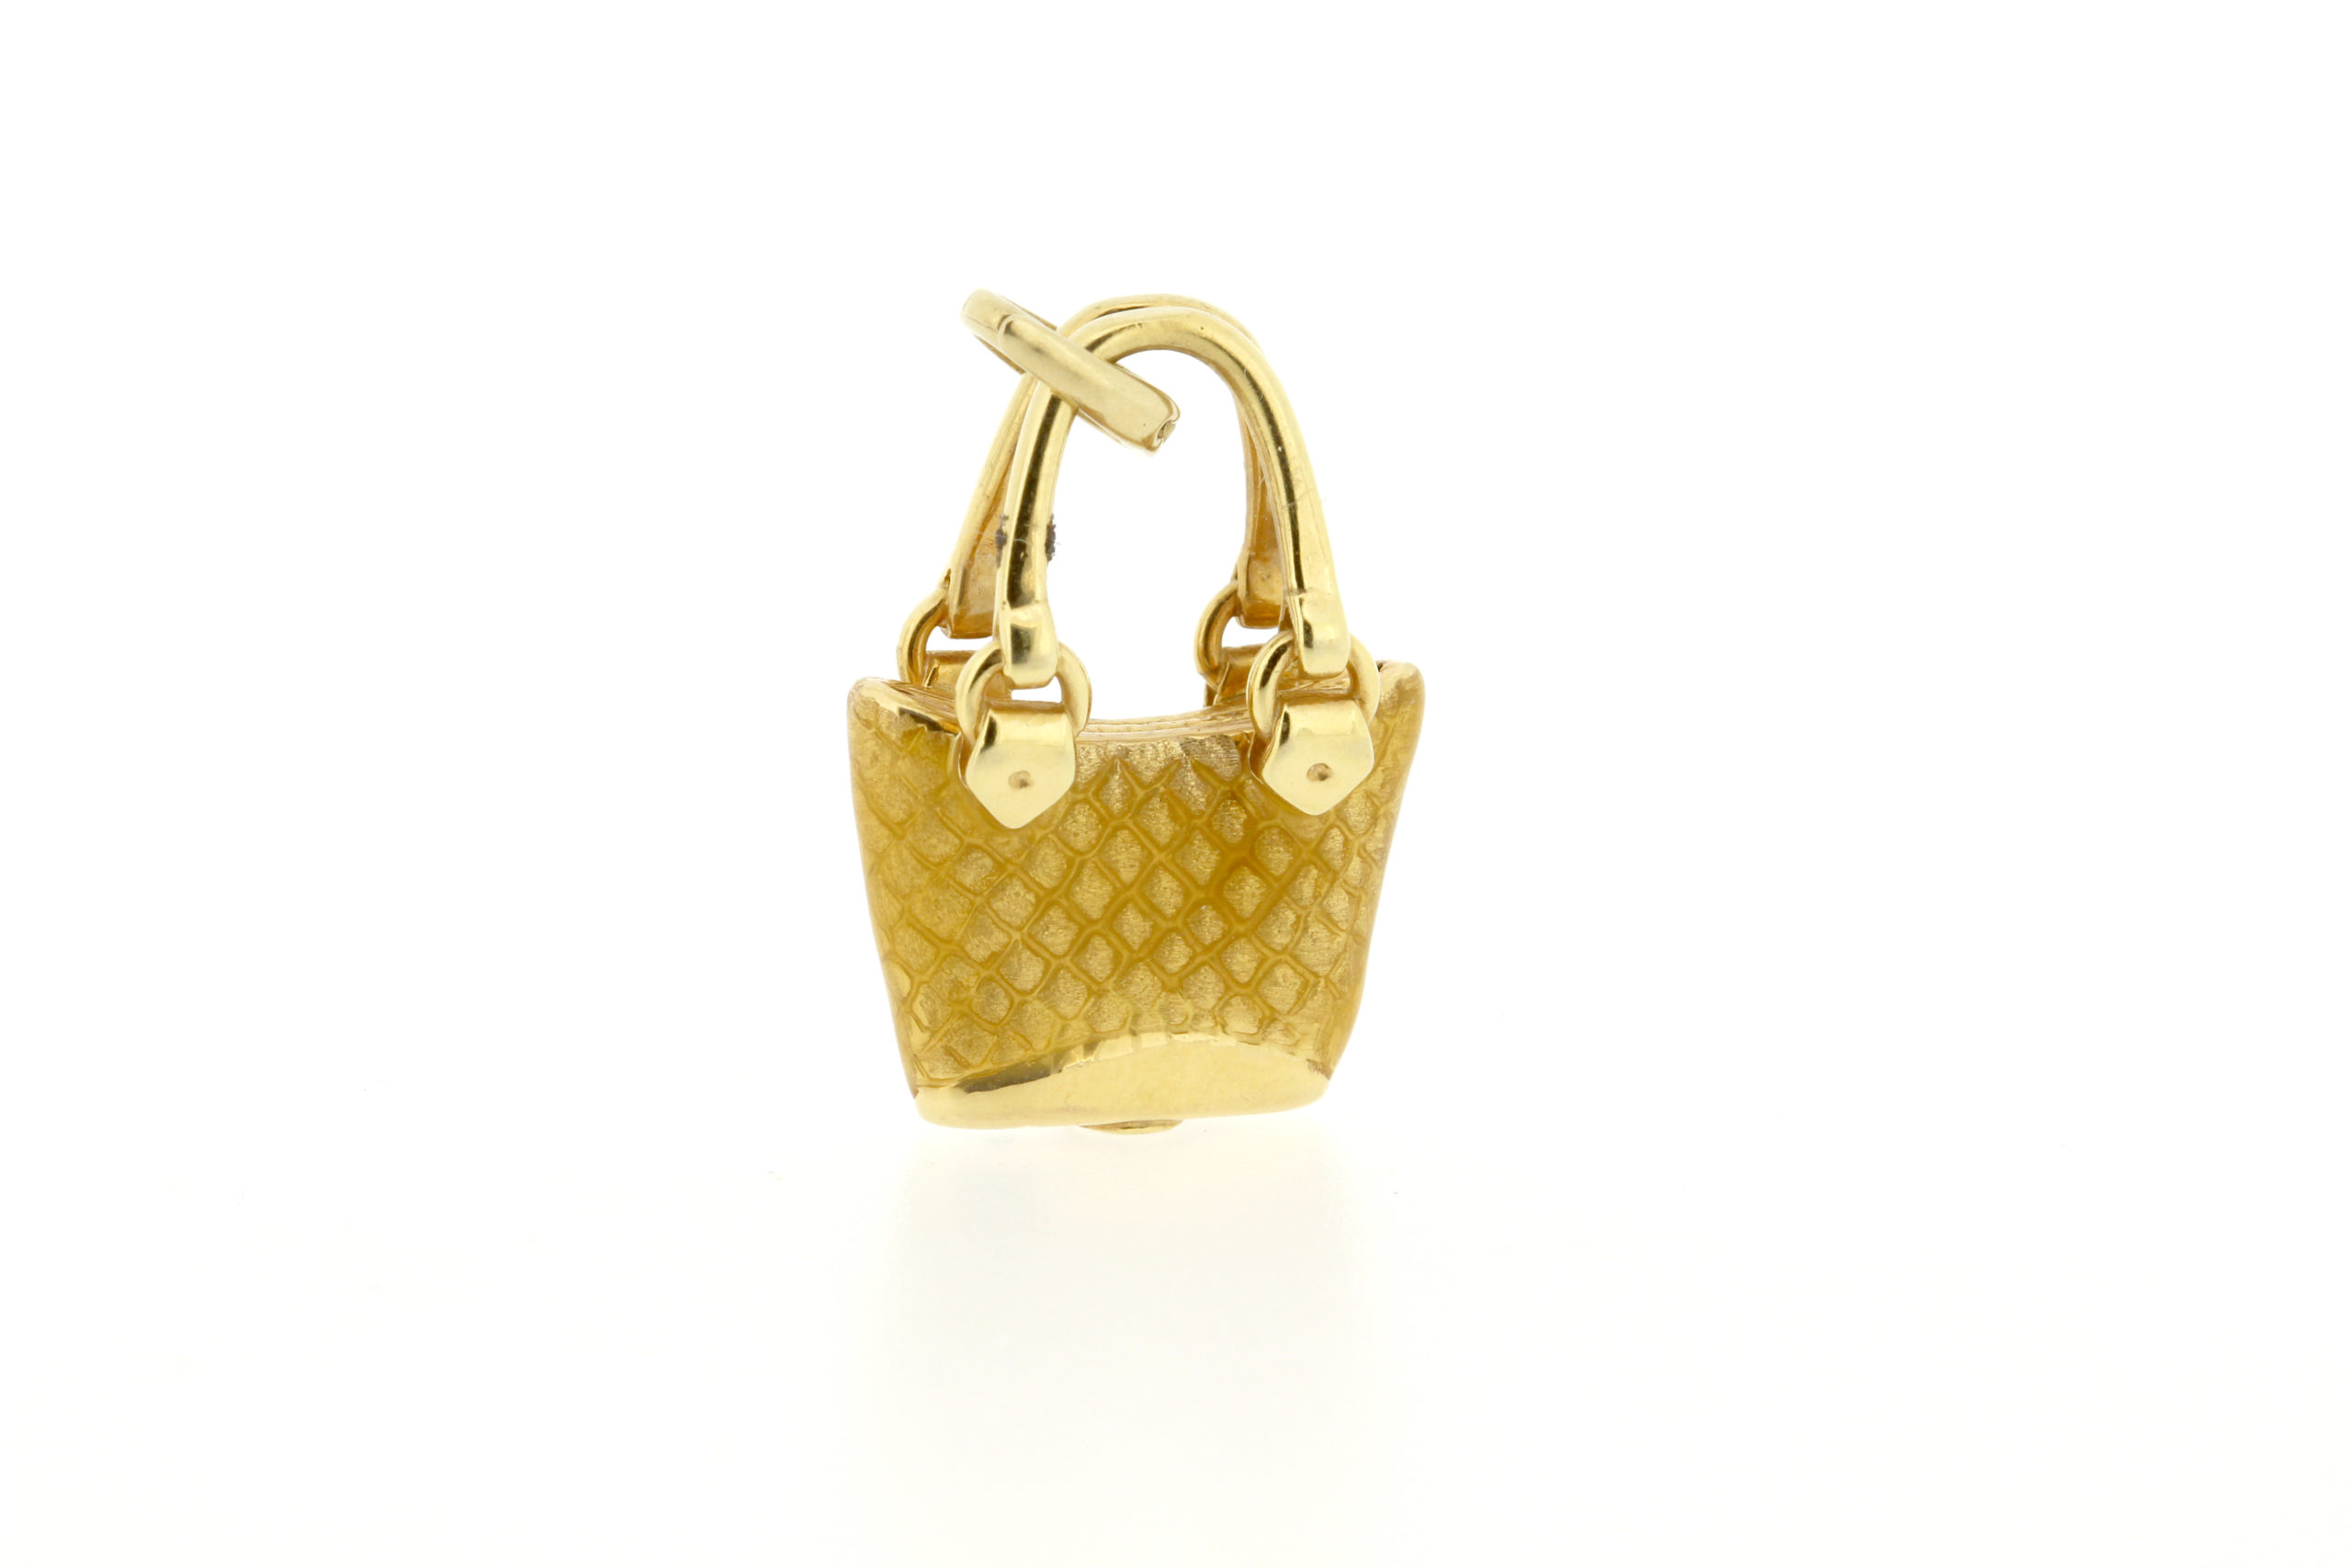 14K Yellow Gold and Enamel Handbag Charm Bracelet